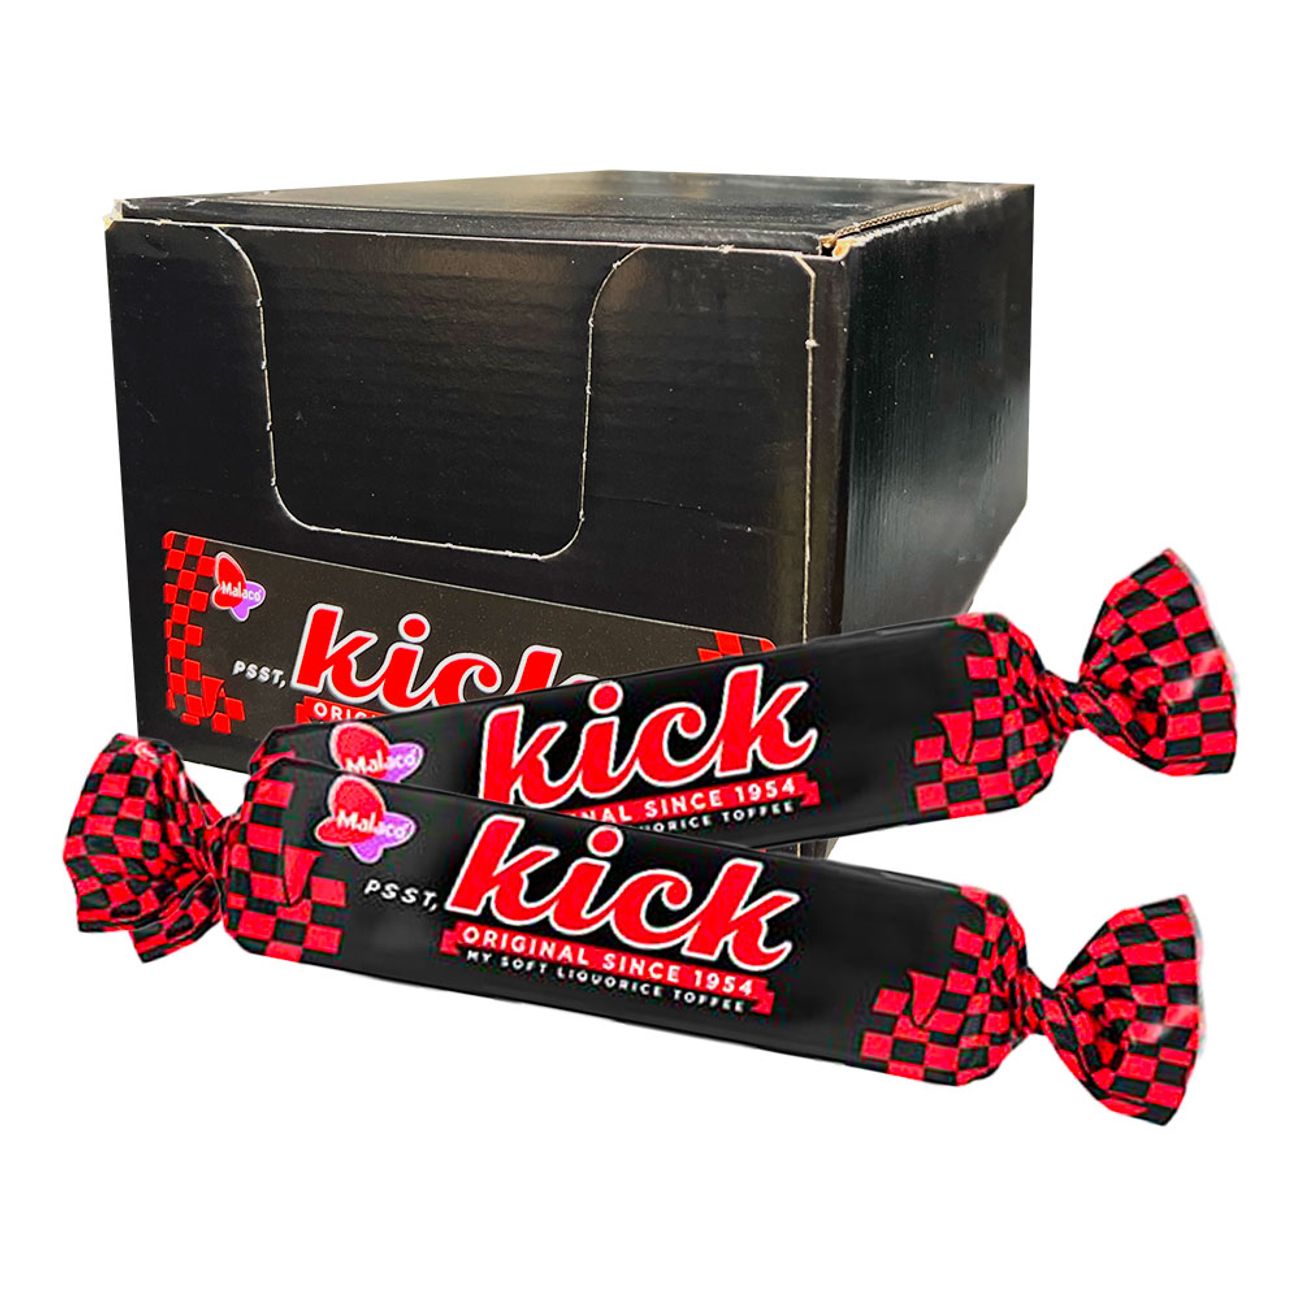 malaco-kick-original-storpack-16107-6